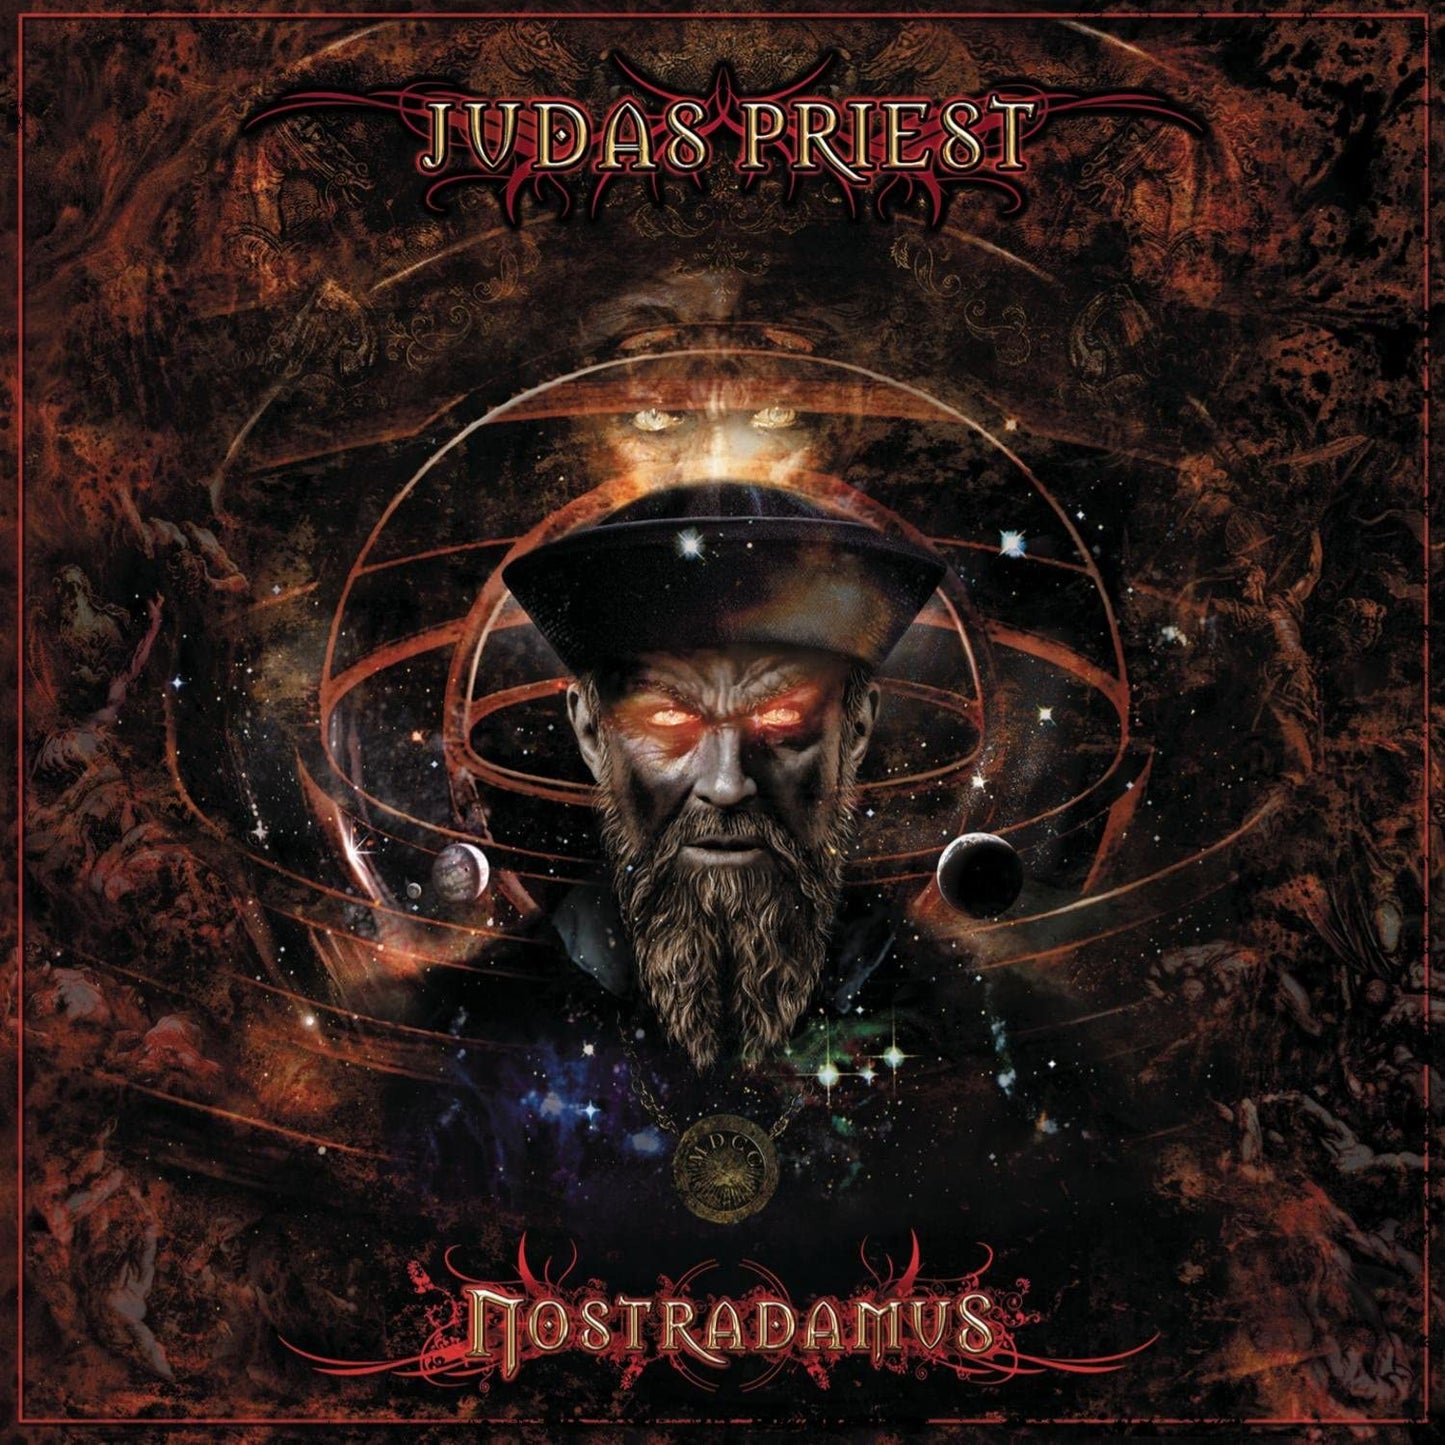 Nostradamus [Audio CD] Judas Priest